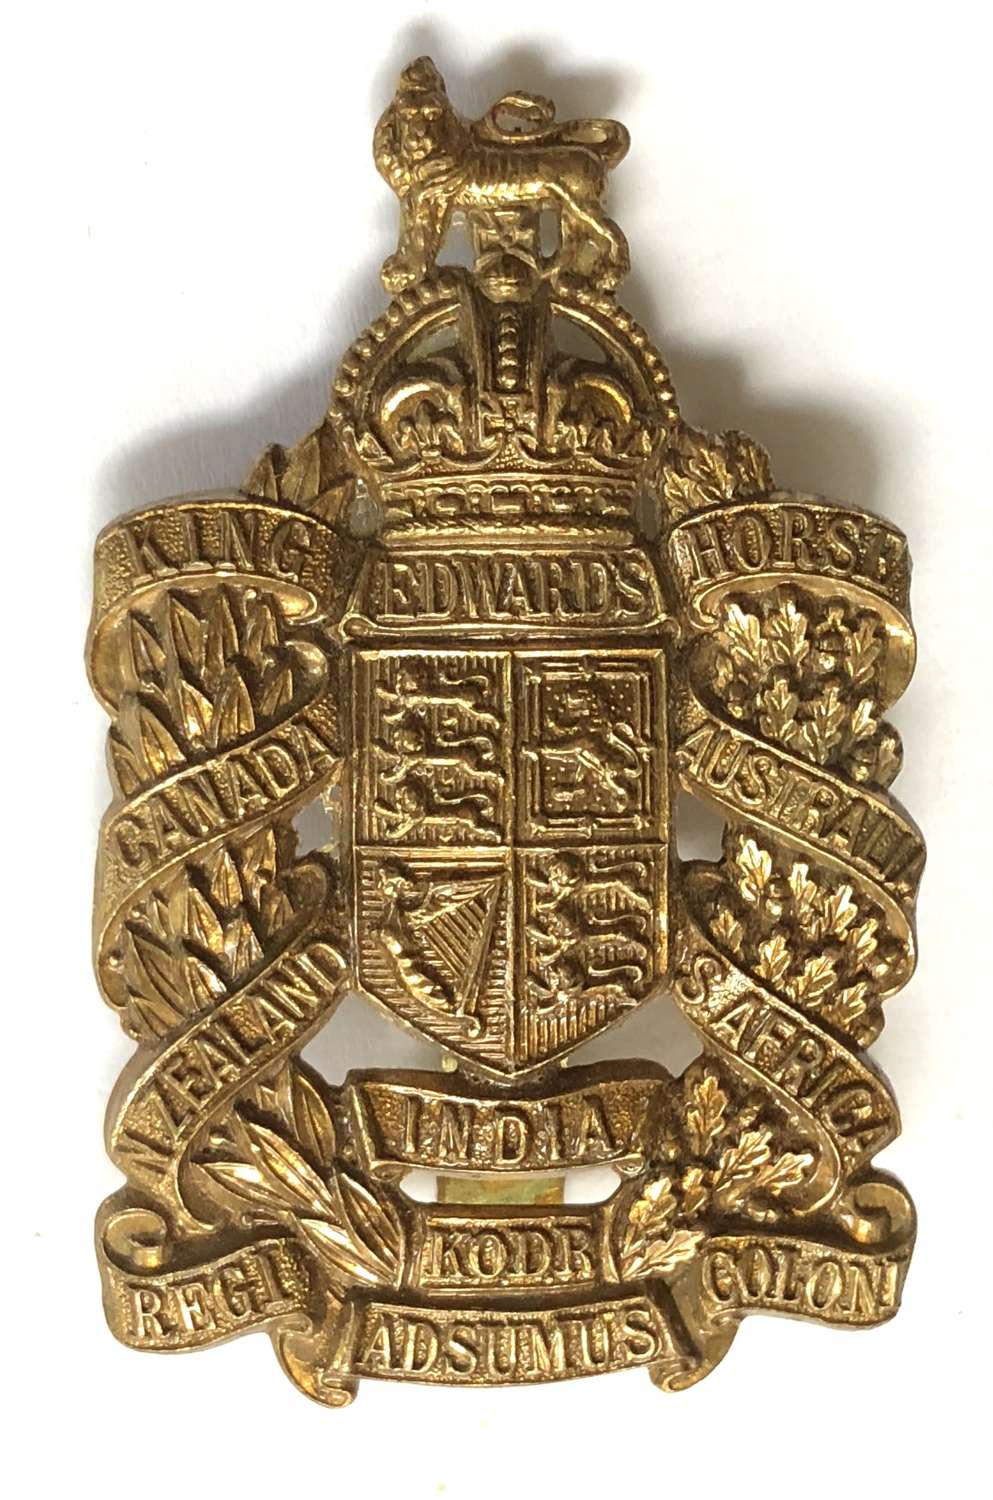 King Edward’s Horse OR’s brass cap badge